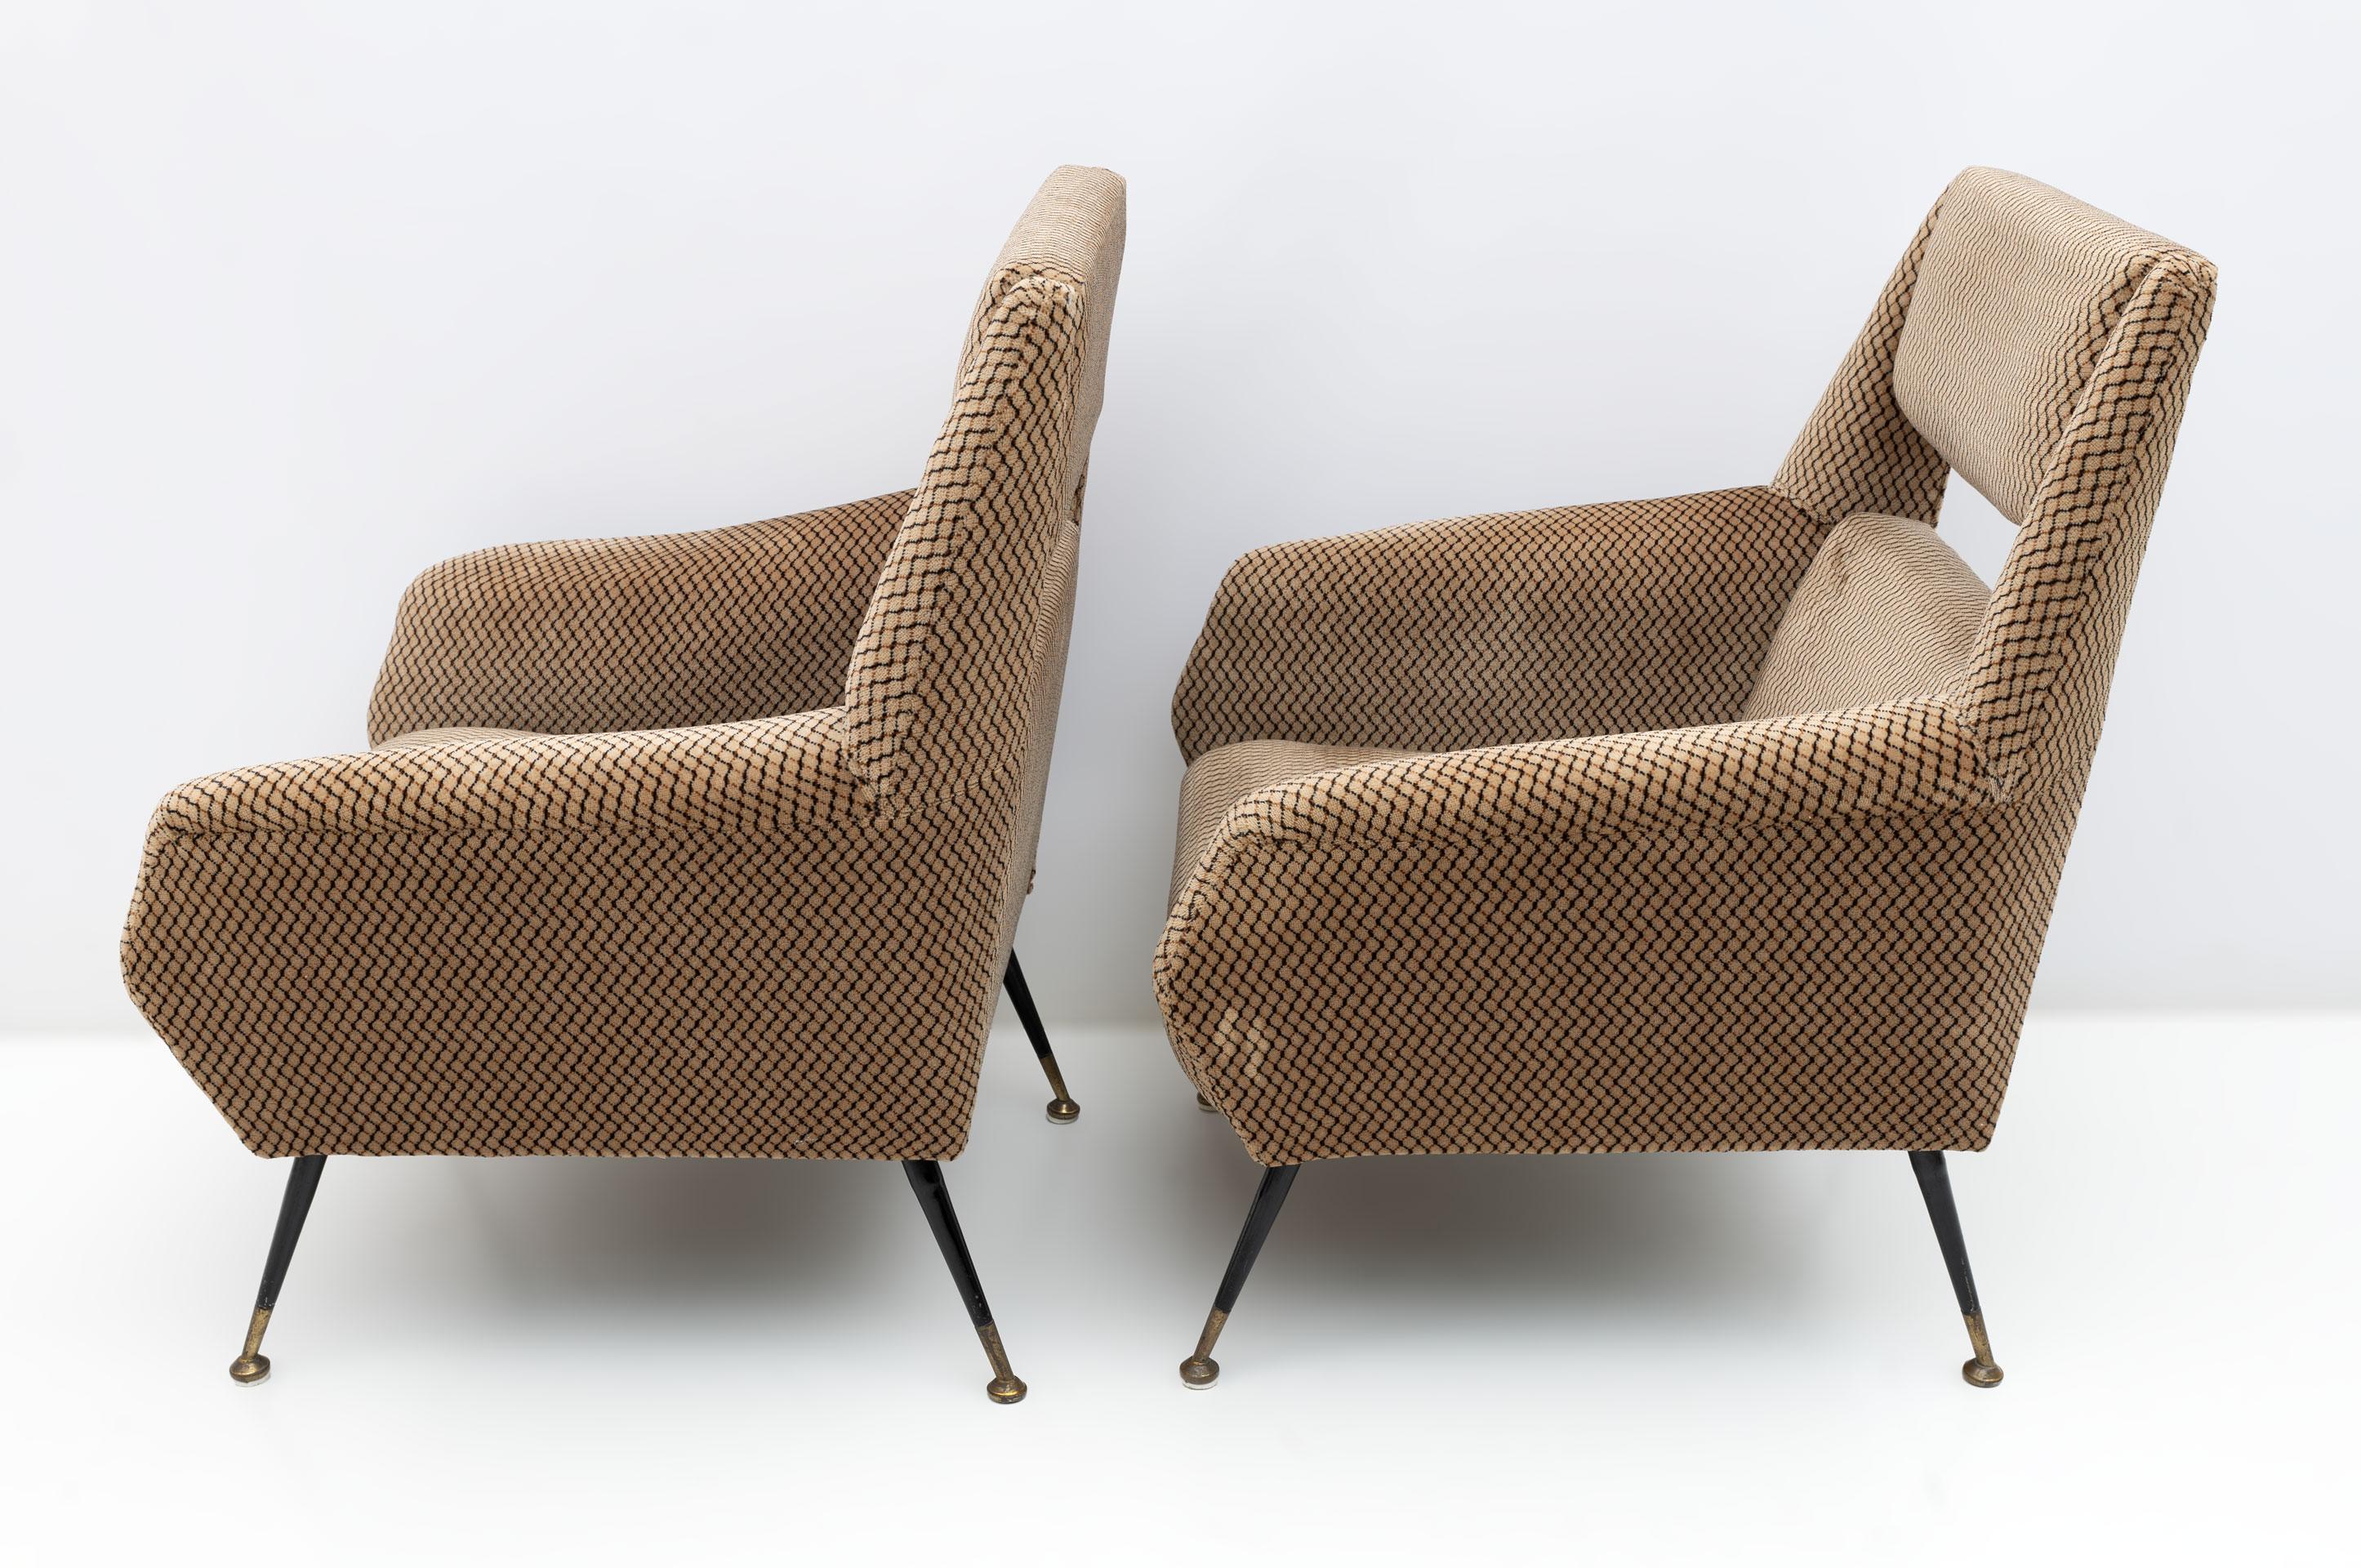 Pair of Gigi Radice Mid-Century Modern Armchairs for Minotti Italia, 1950s For Sale 1